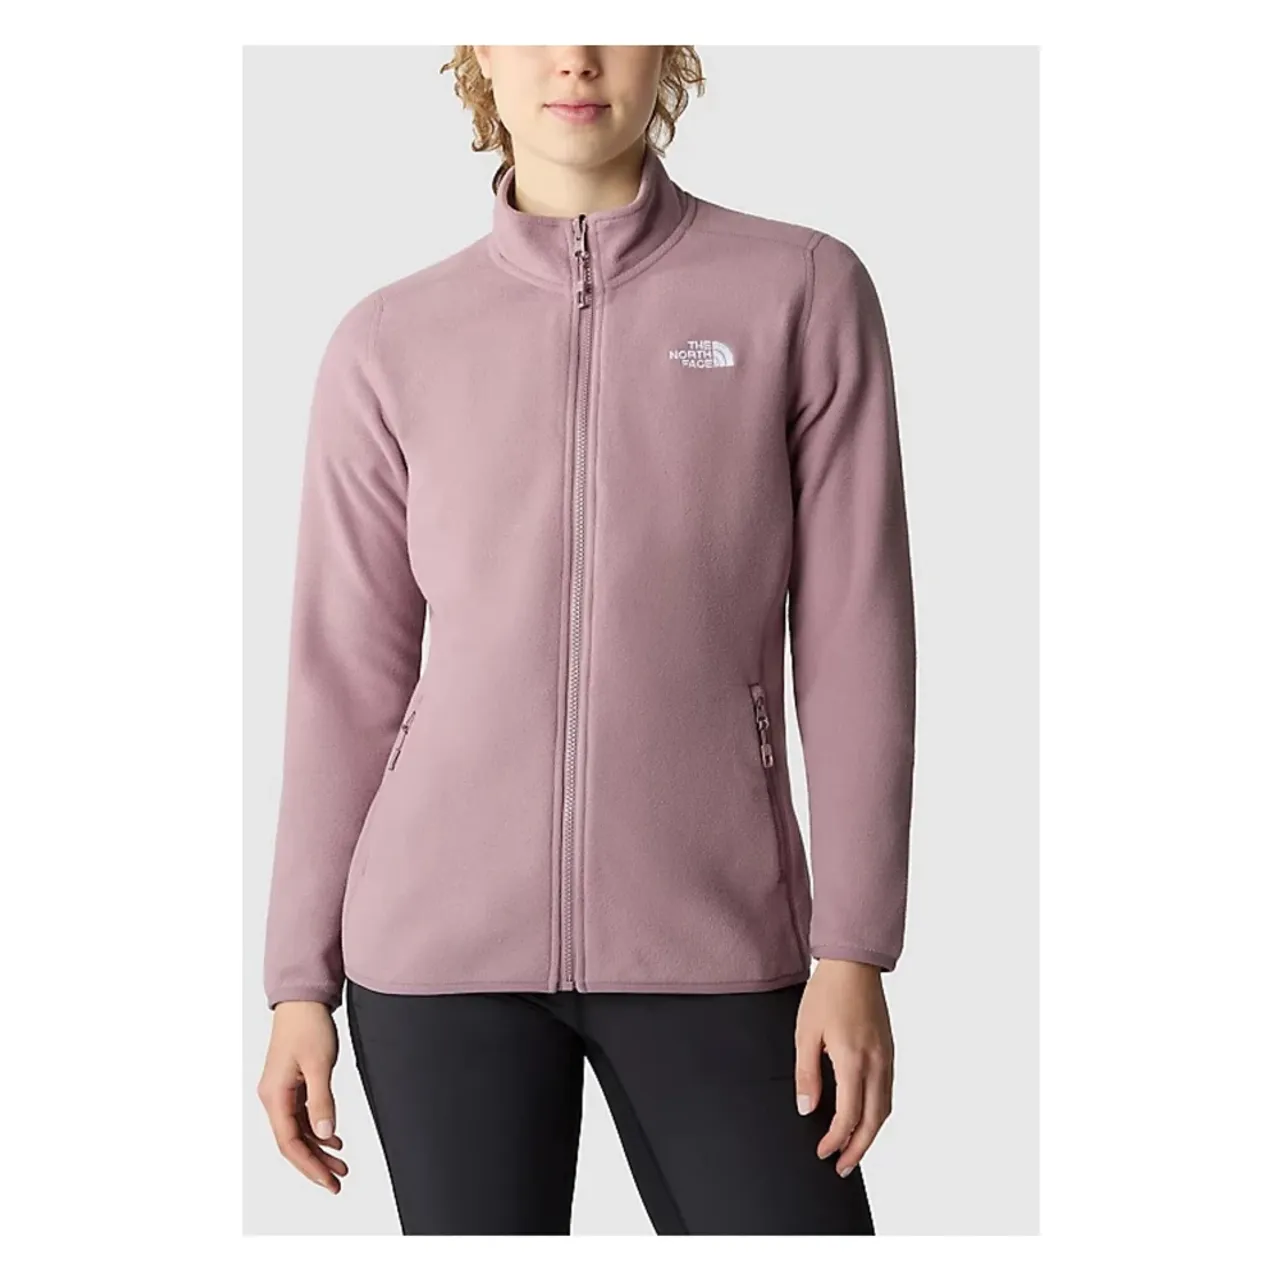 The North Face , Glacier Pile Zip Sweatshirt ,Pink female, Sizes: